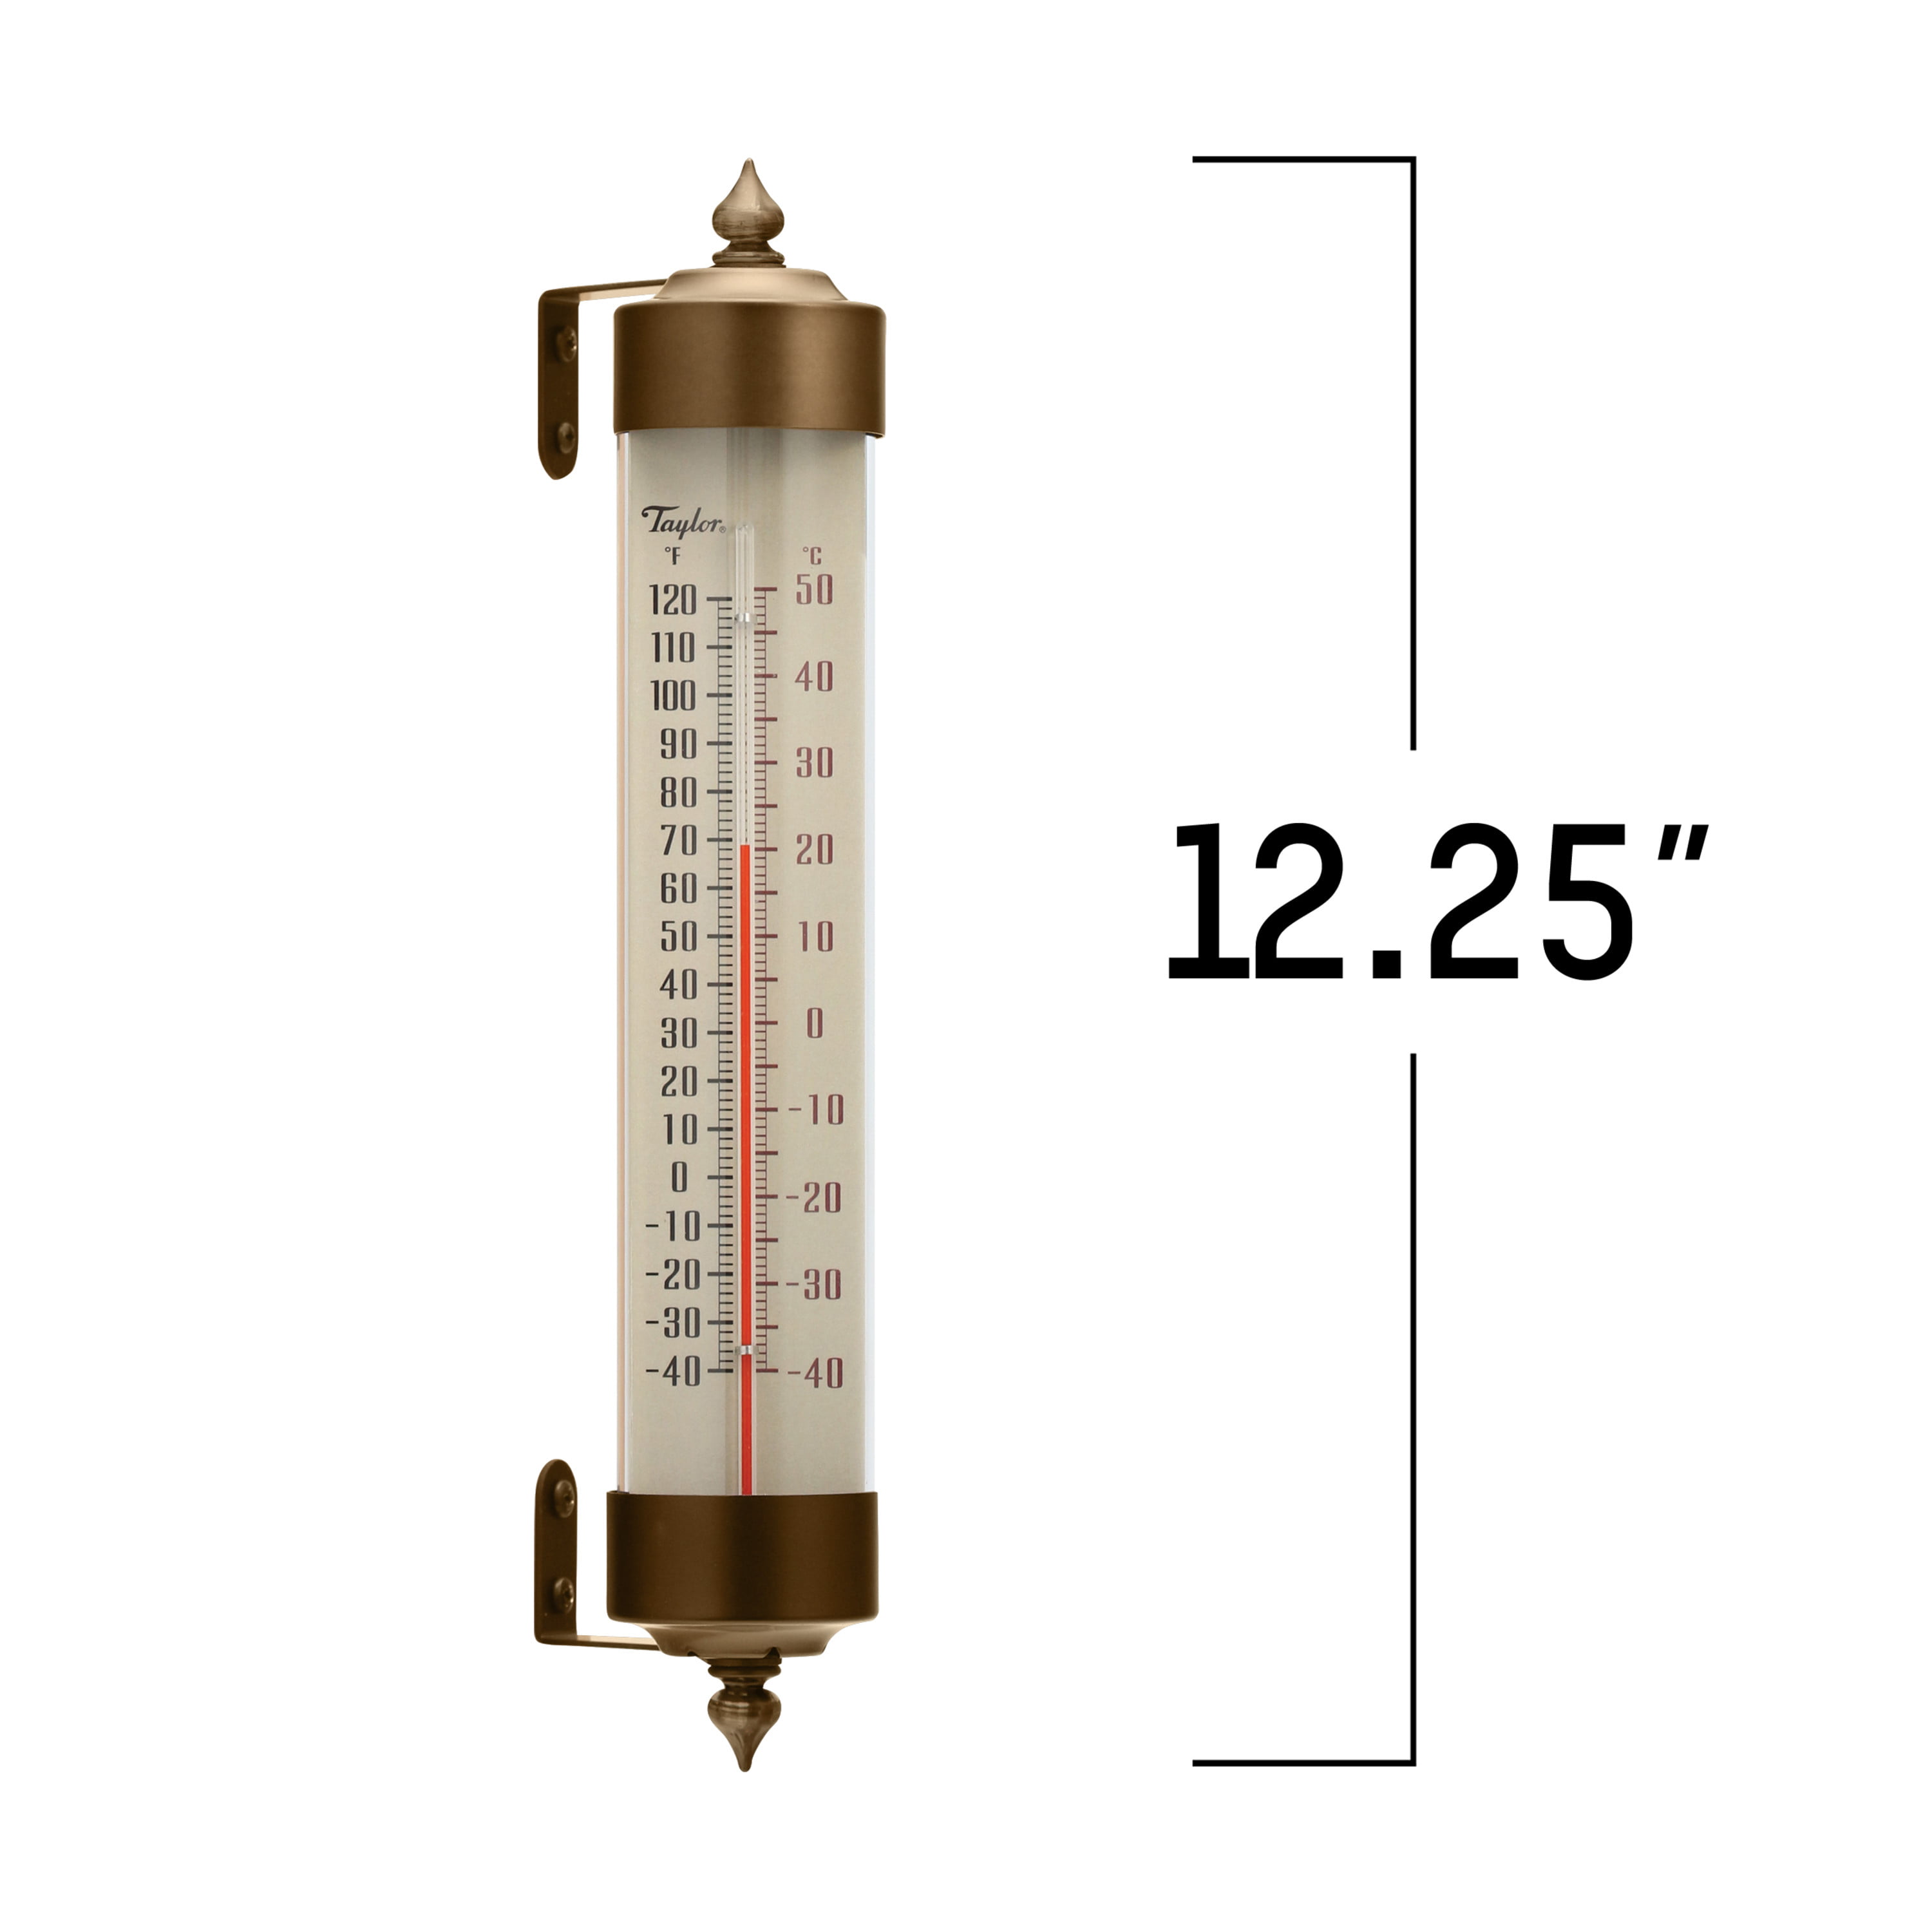 12 Metal Patio Thermometer – Taylor USA